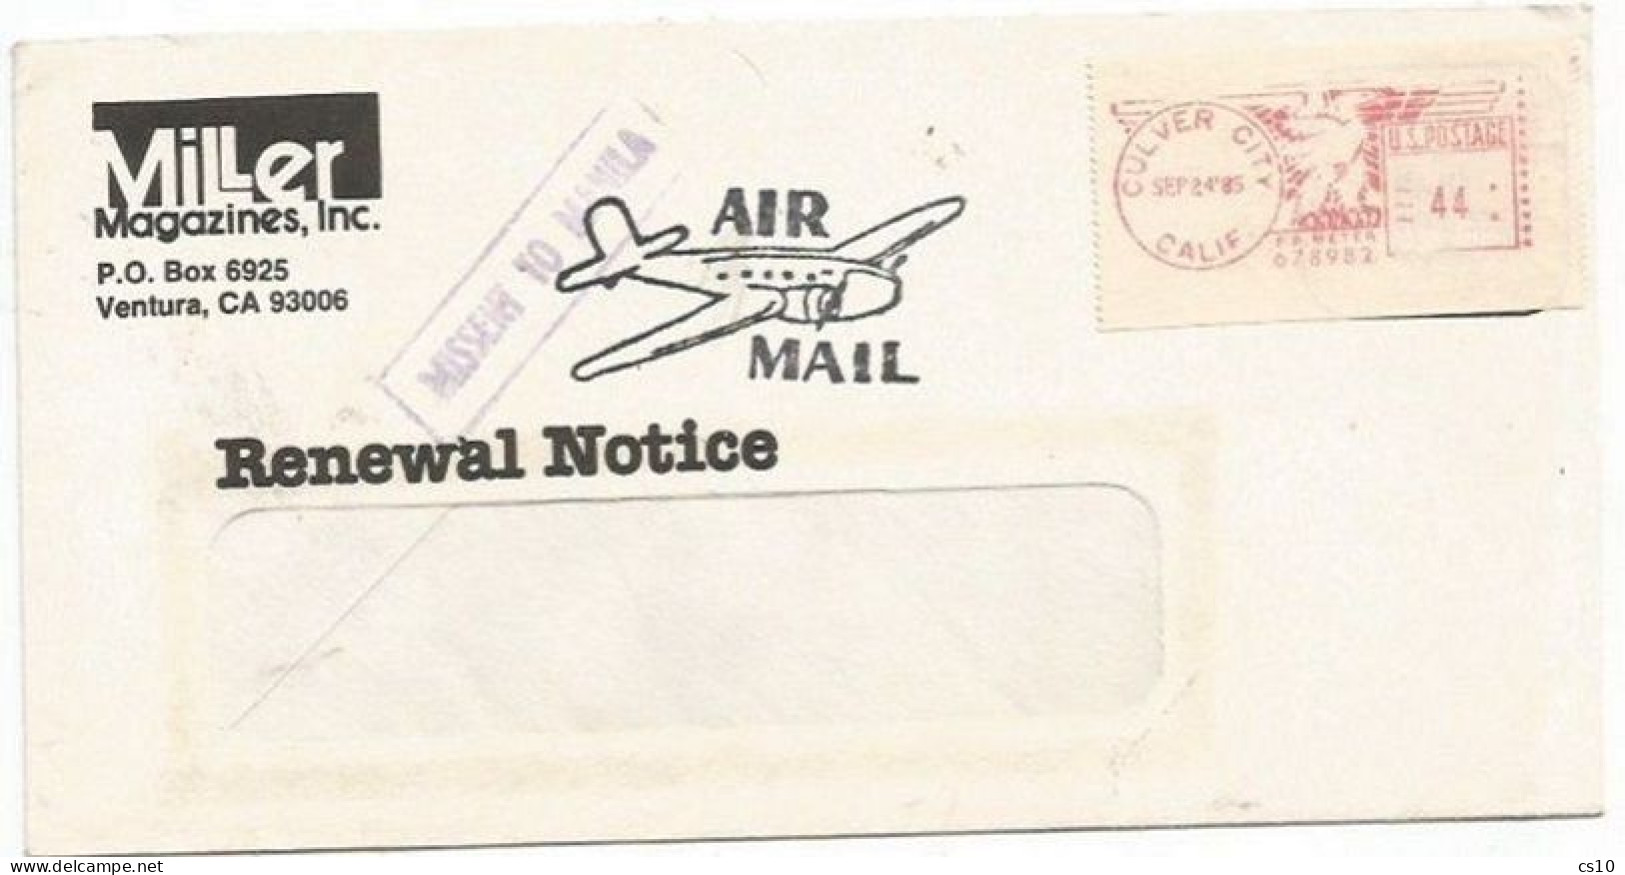 USA 1985 AirmailCV Culver City CA 24sep85 X Italy Milano "MISSENT TO MANILA" Postage Label C.44 - Storia Postale